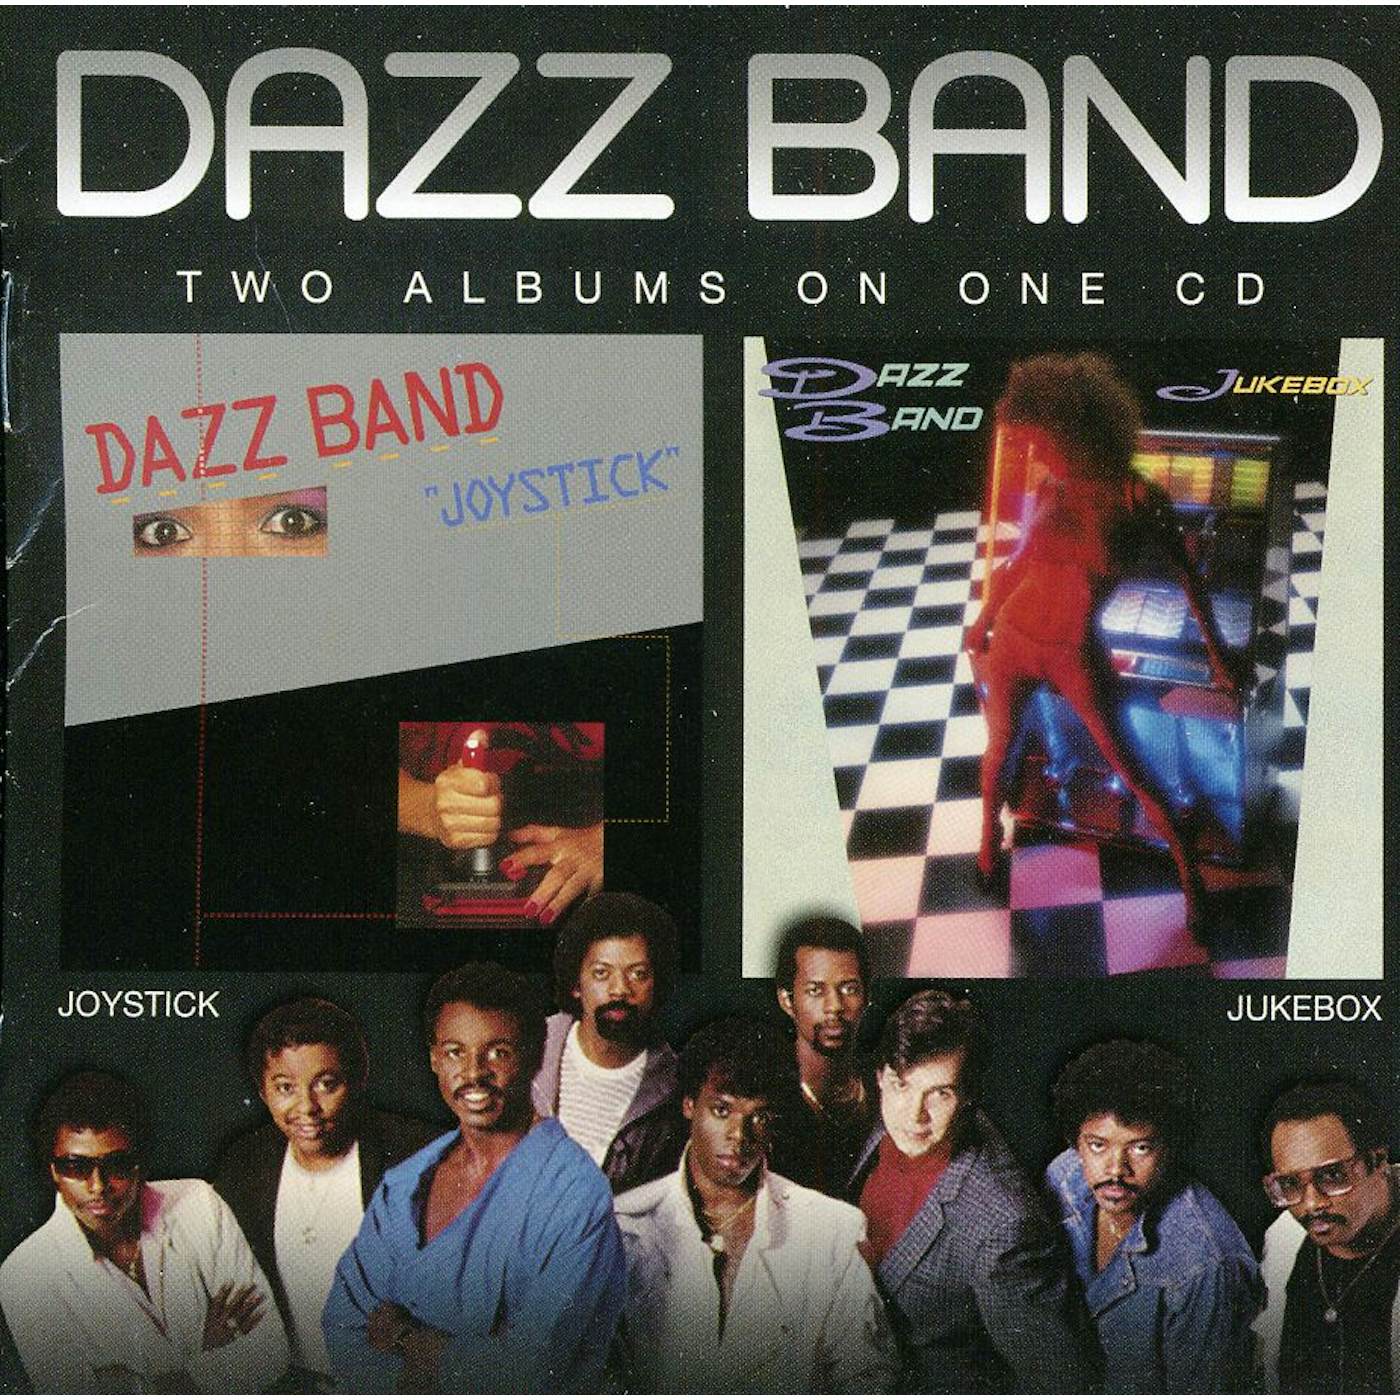 Dazz Band JOYSTICK / JUKEBOX CD